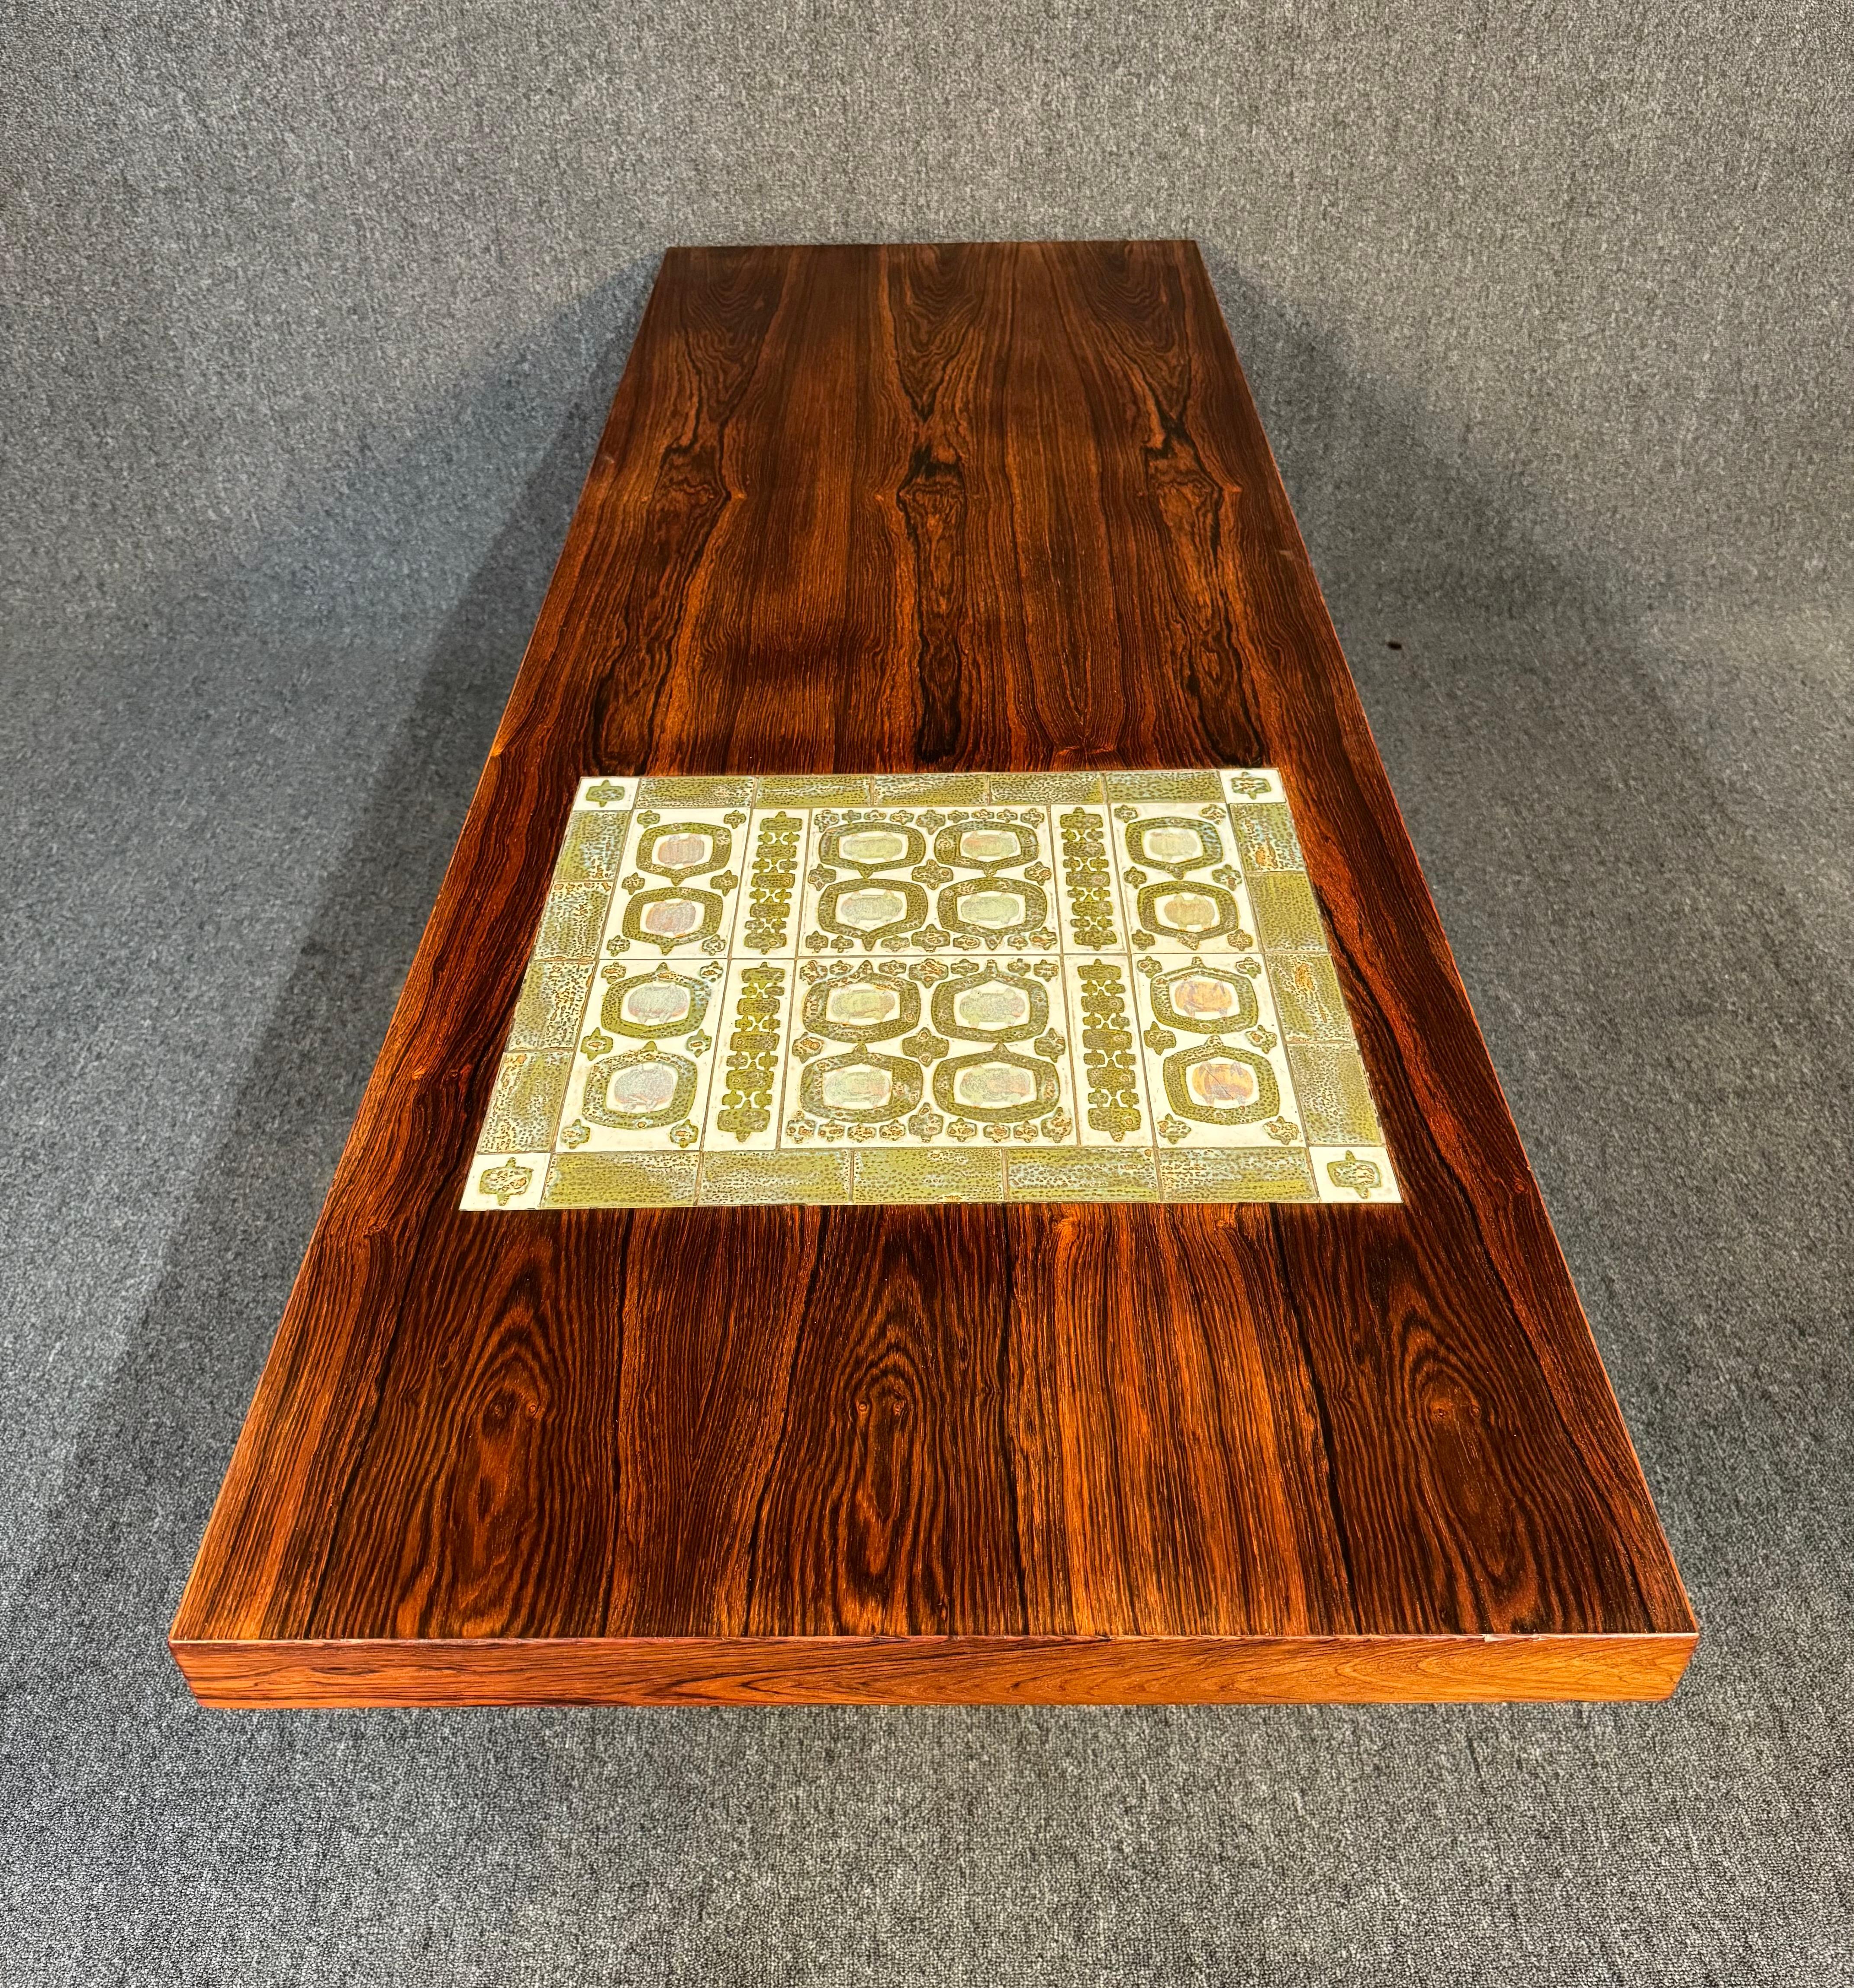 Vintage Danish MidCentury Modern Rosewood Coffee Table & Tiles by Severin Hansen For Sale 3